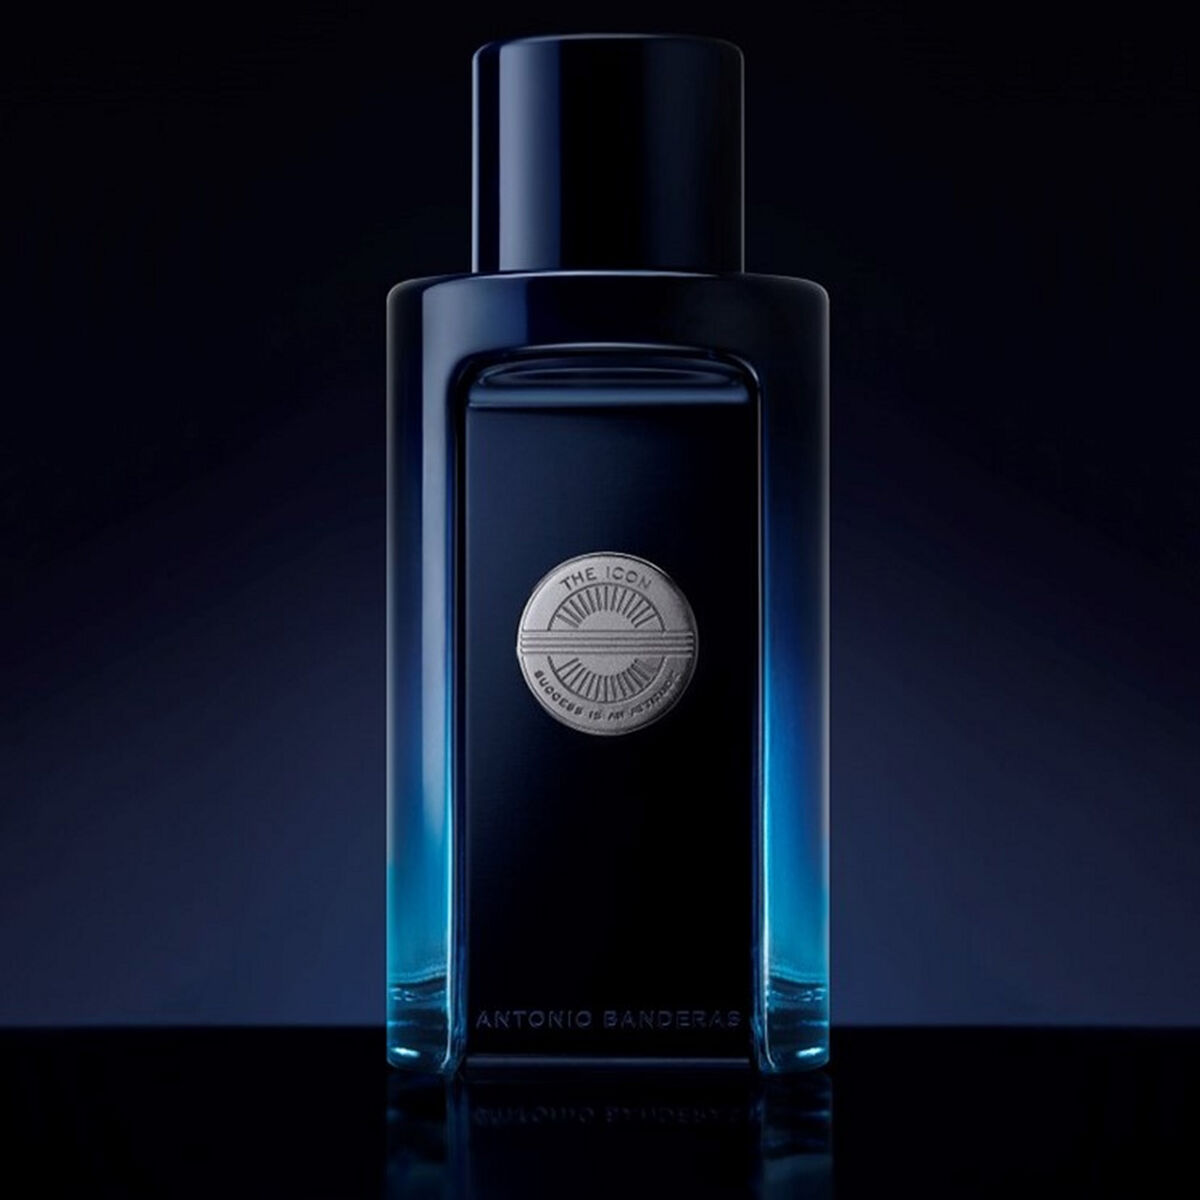 Perfume Antonio Banderas The Icon EDT 100 ml